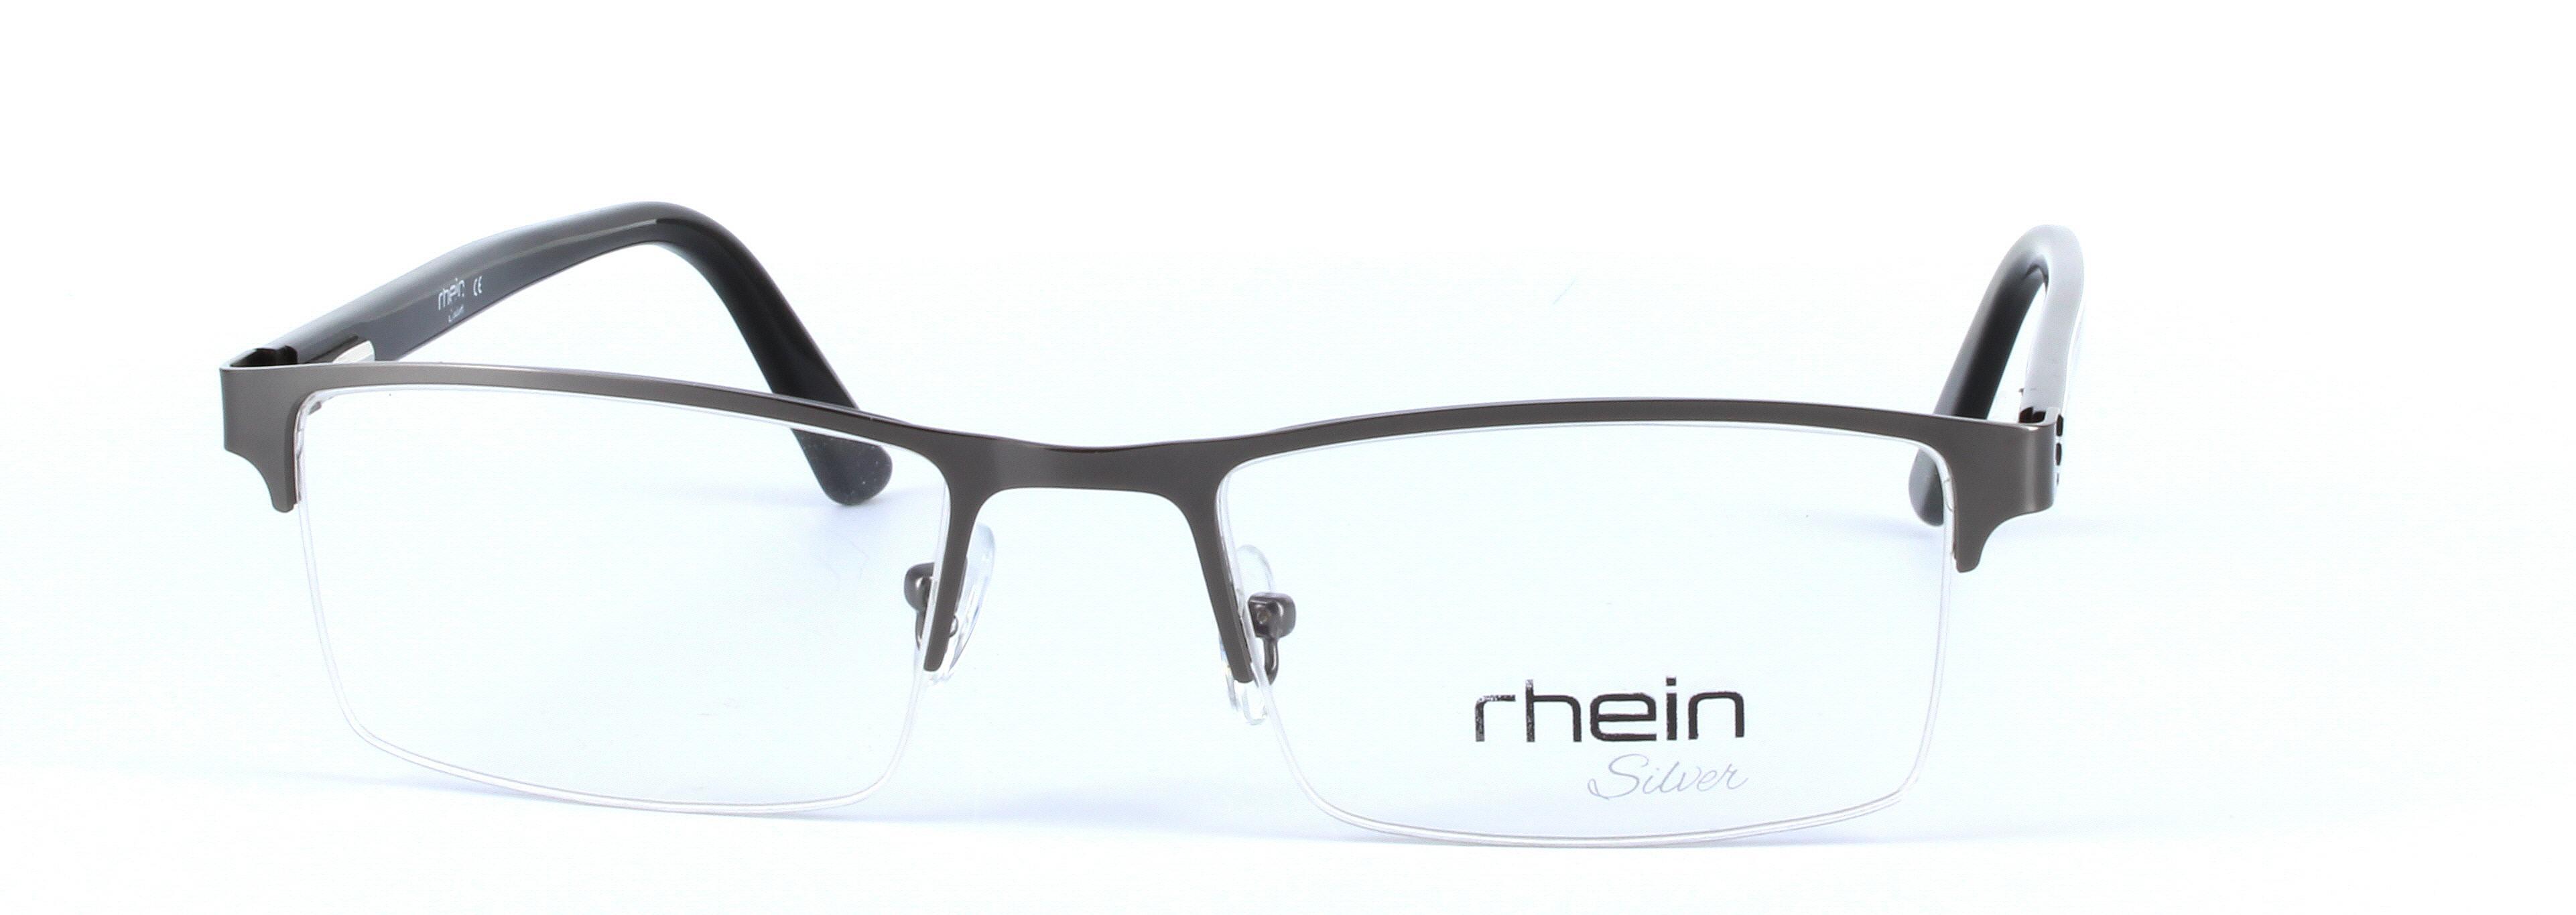 Leo Blue Semi Rimless Rectangular Metal Glasses - Image View 5